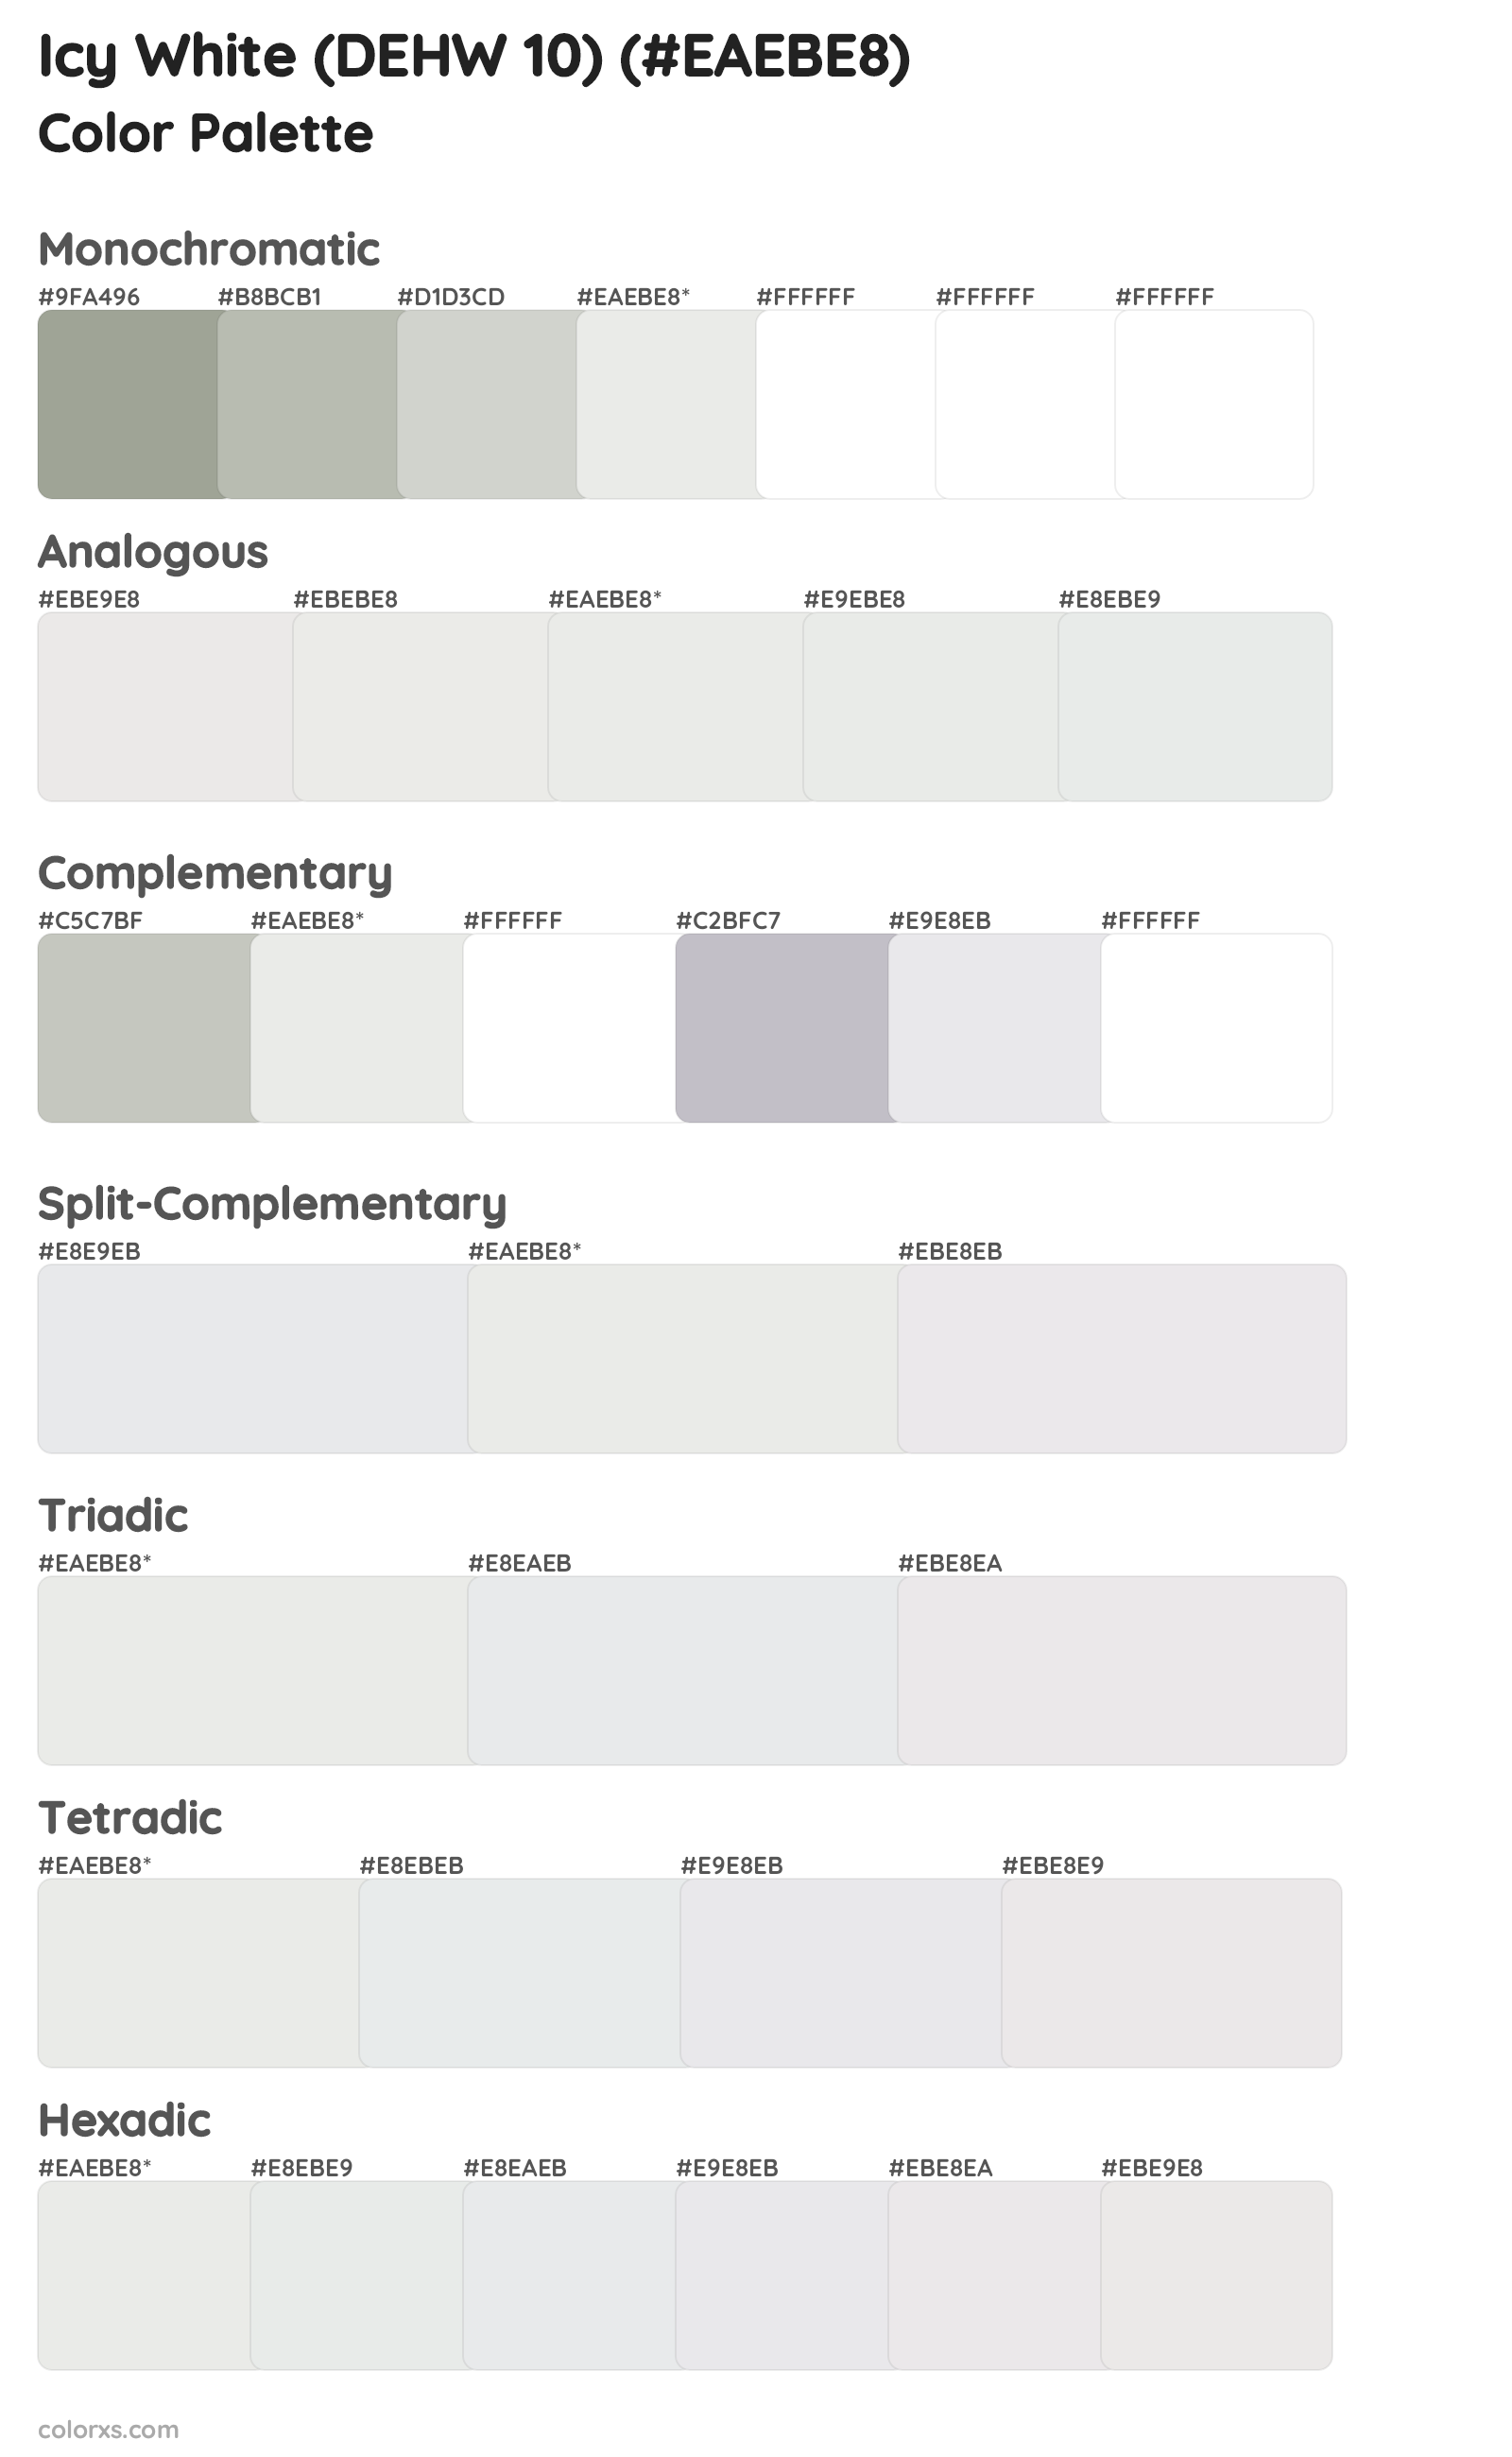 Icy White (DEHW 10) Color Scheme Palettes